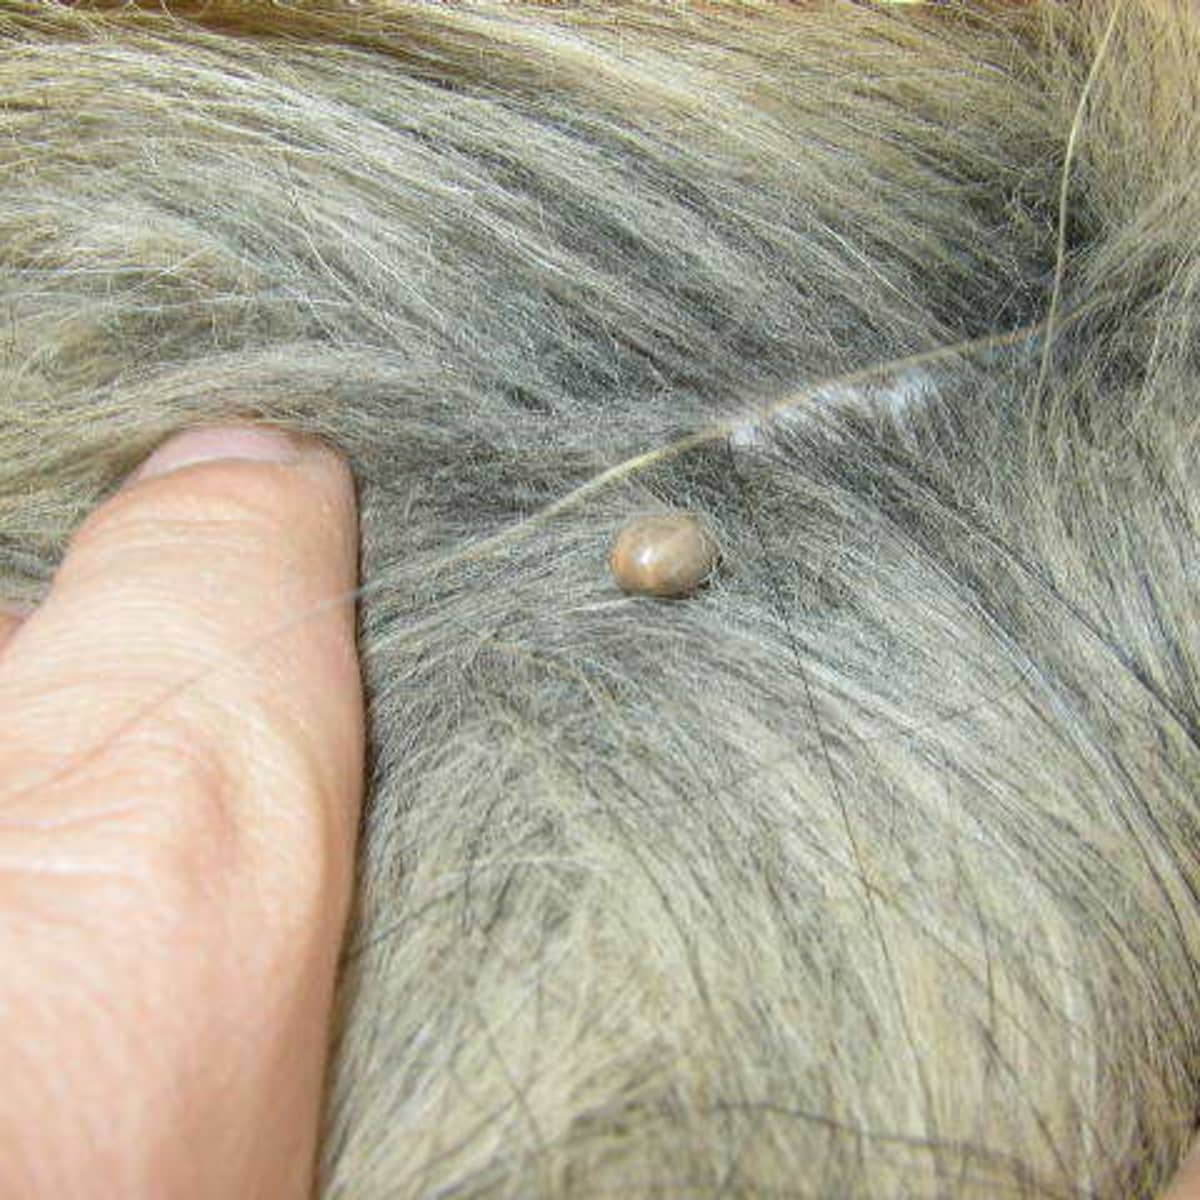 Embedded tick on dog